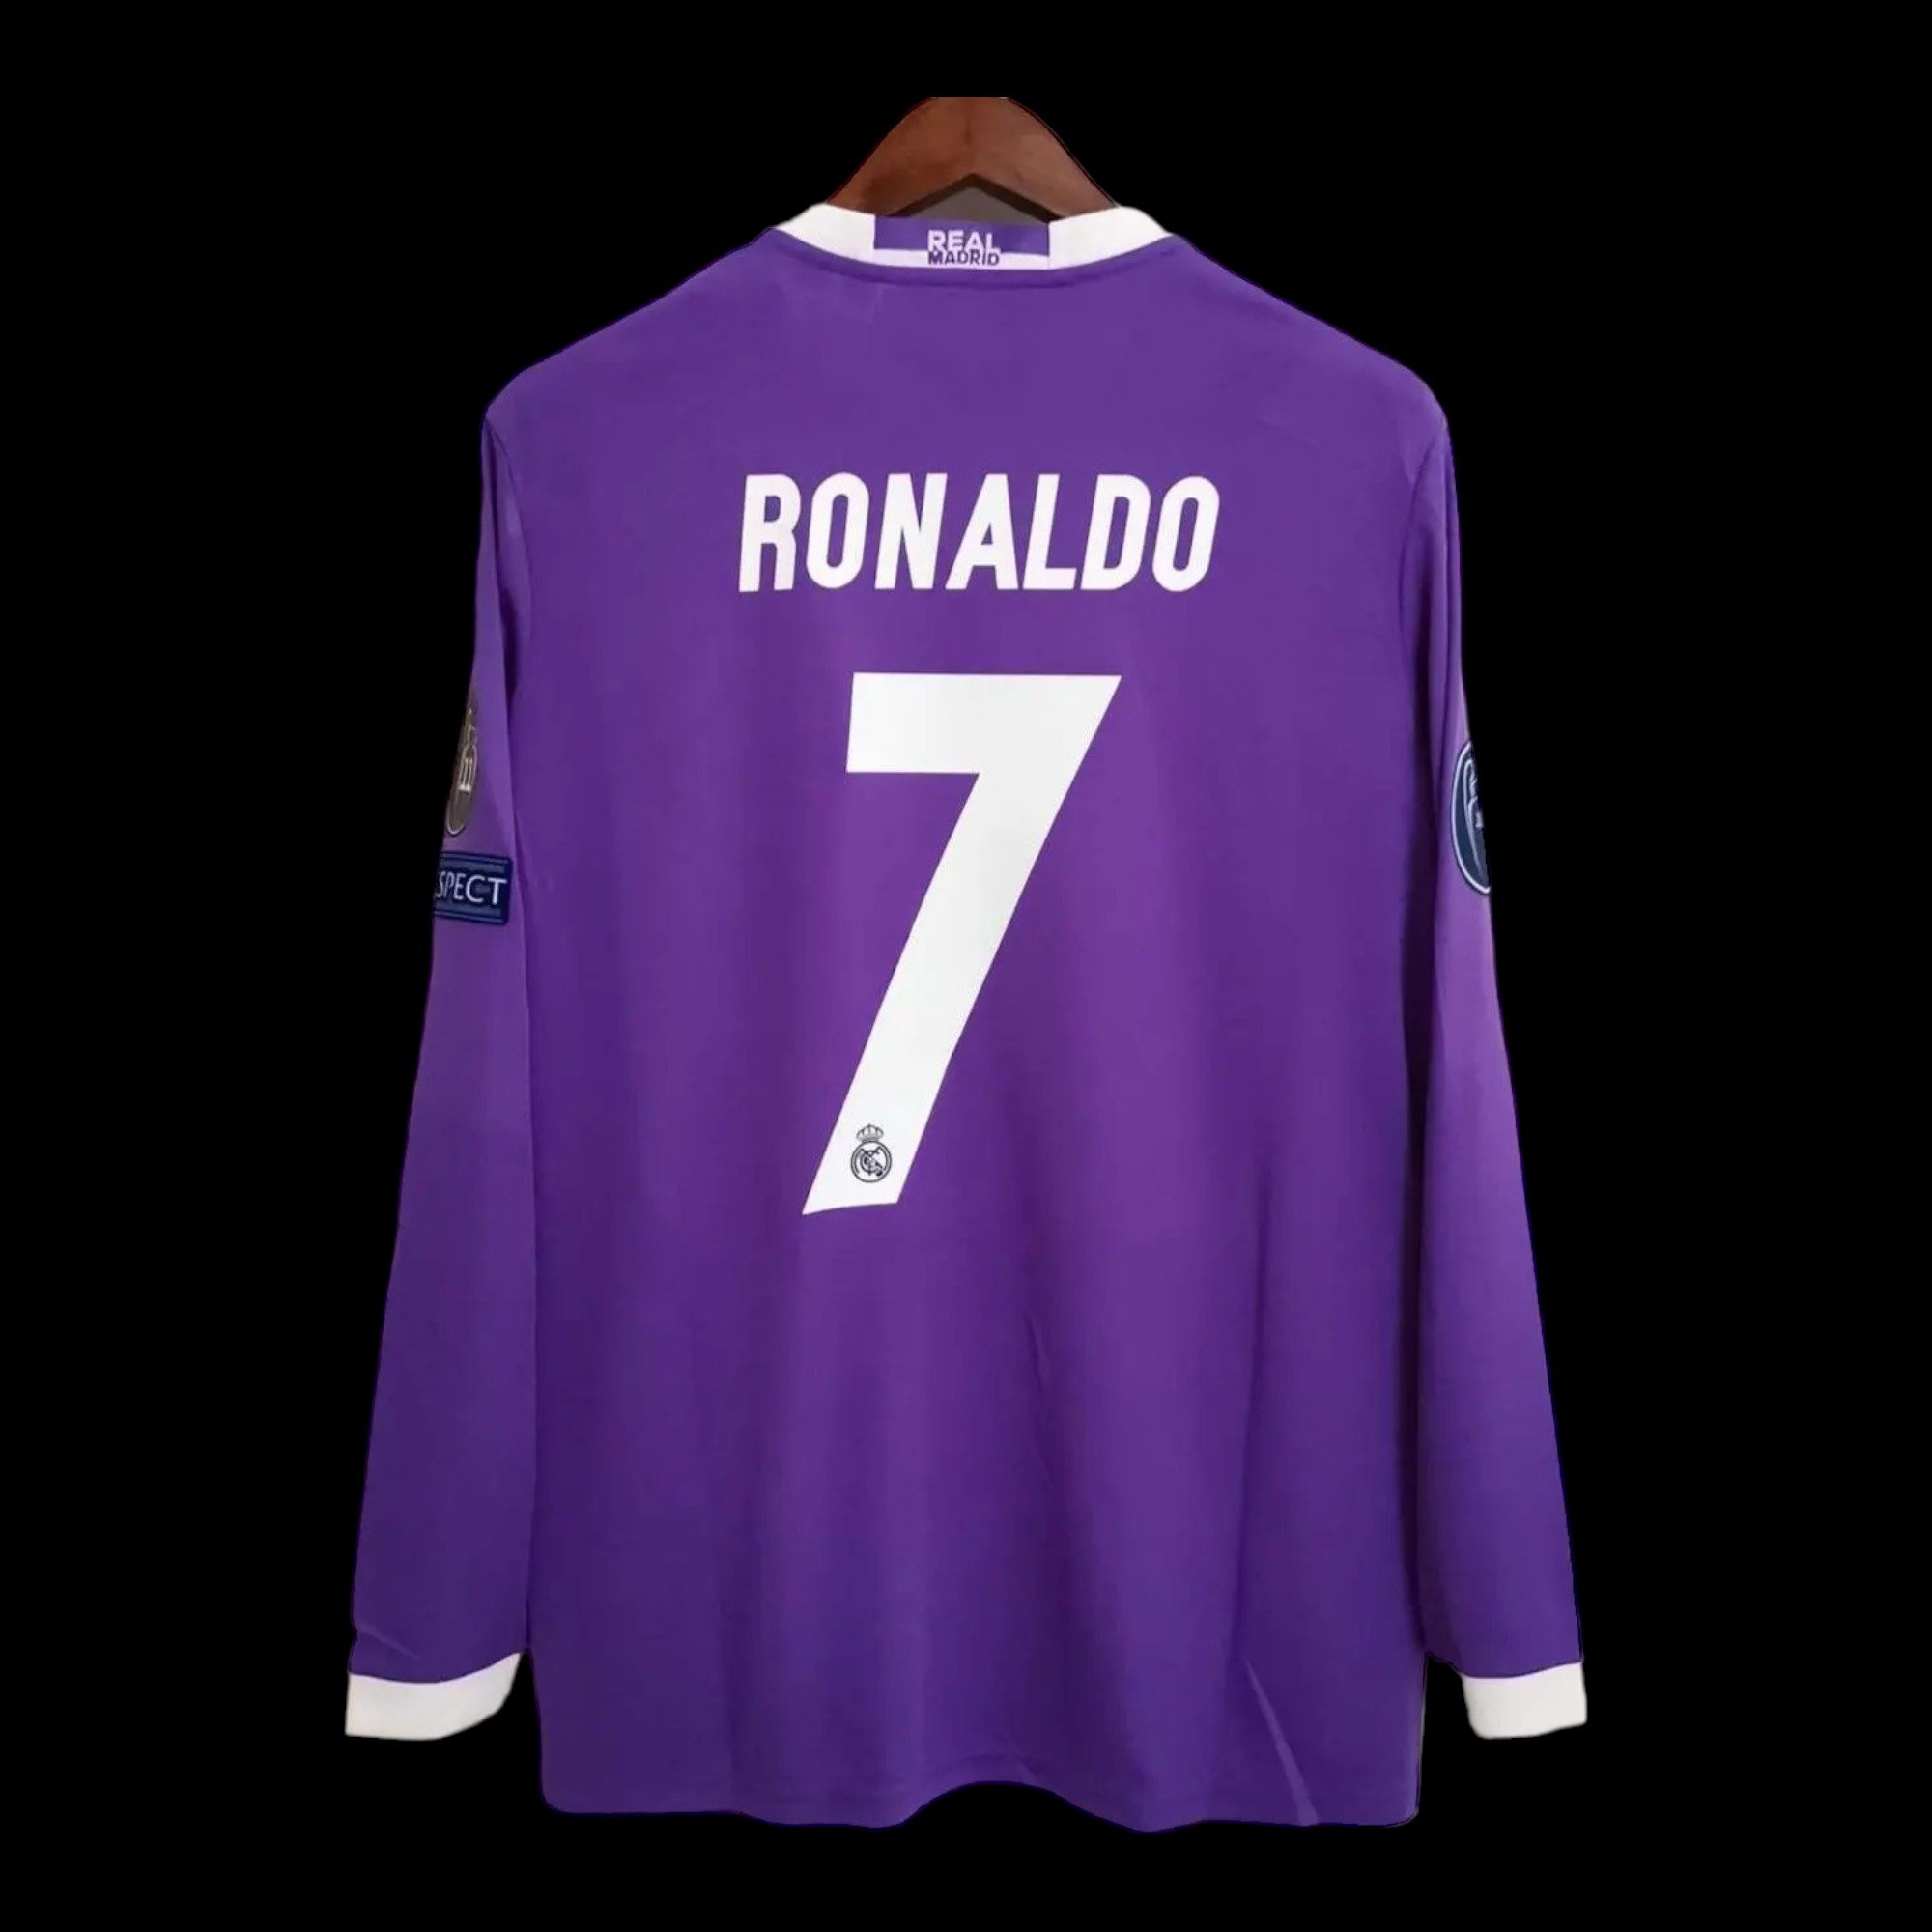 ronaldo purple jersey